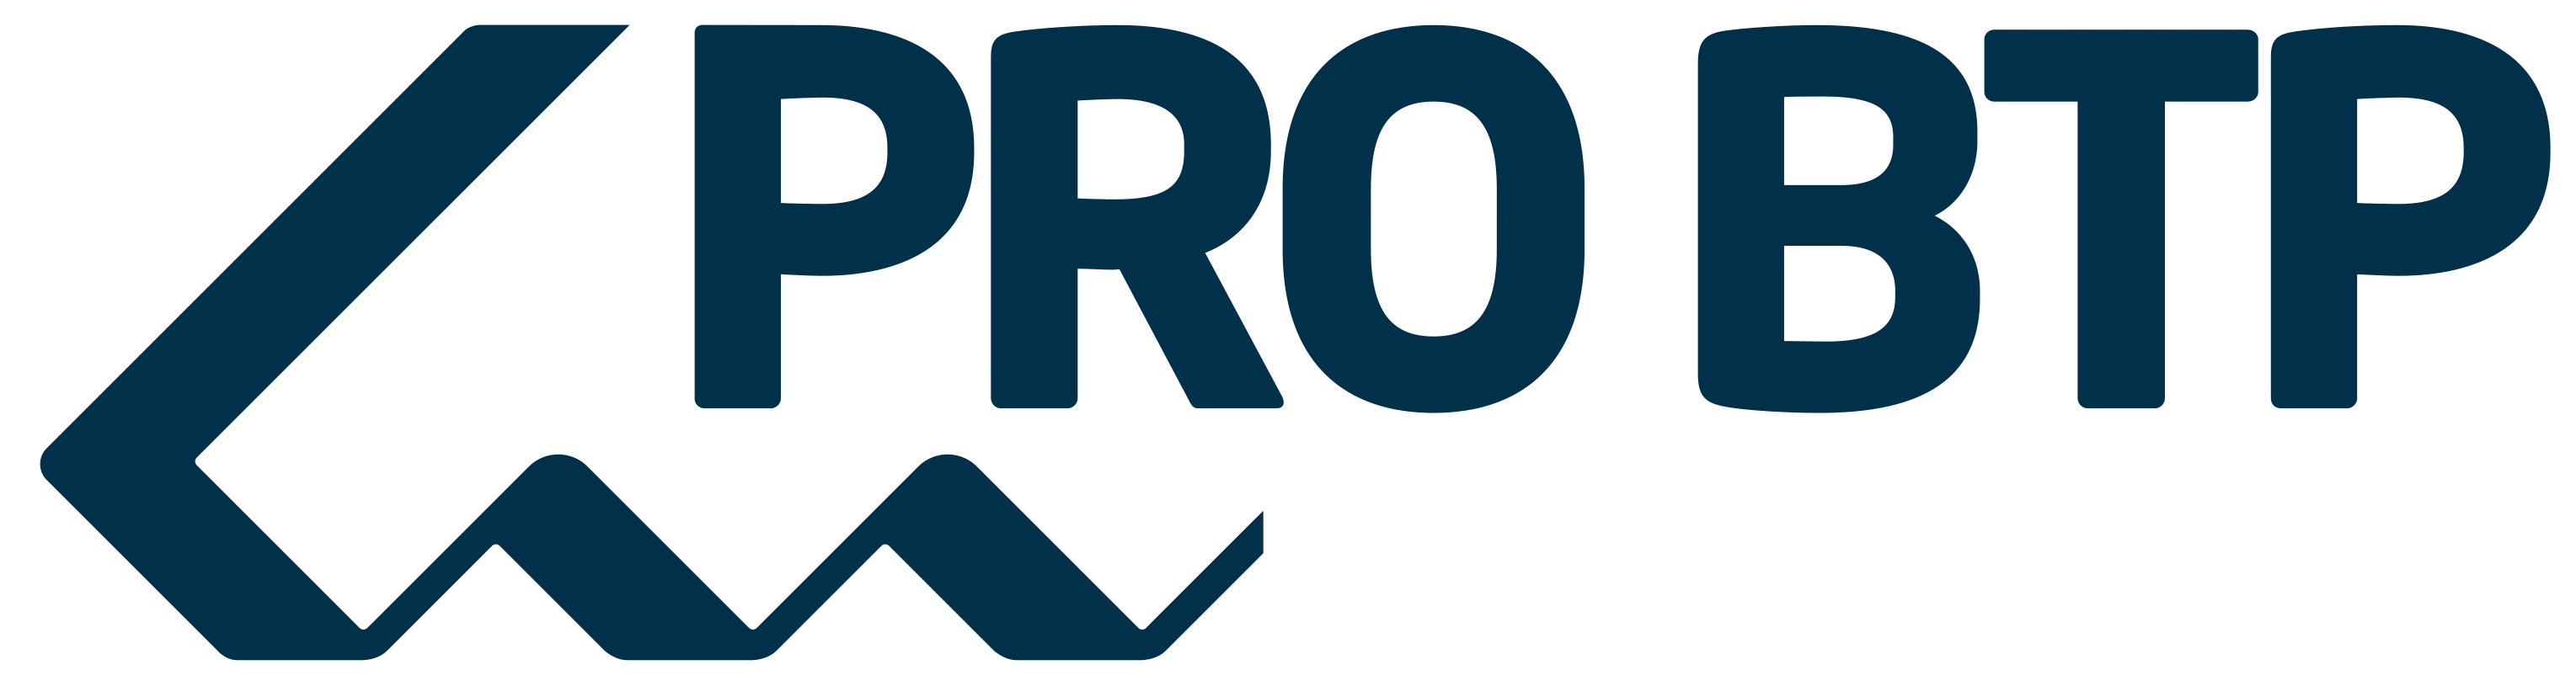 logo_pro_btp_rvb_300dpi_0.png